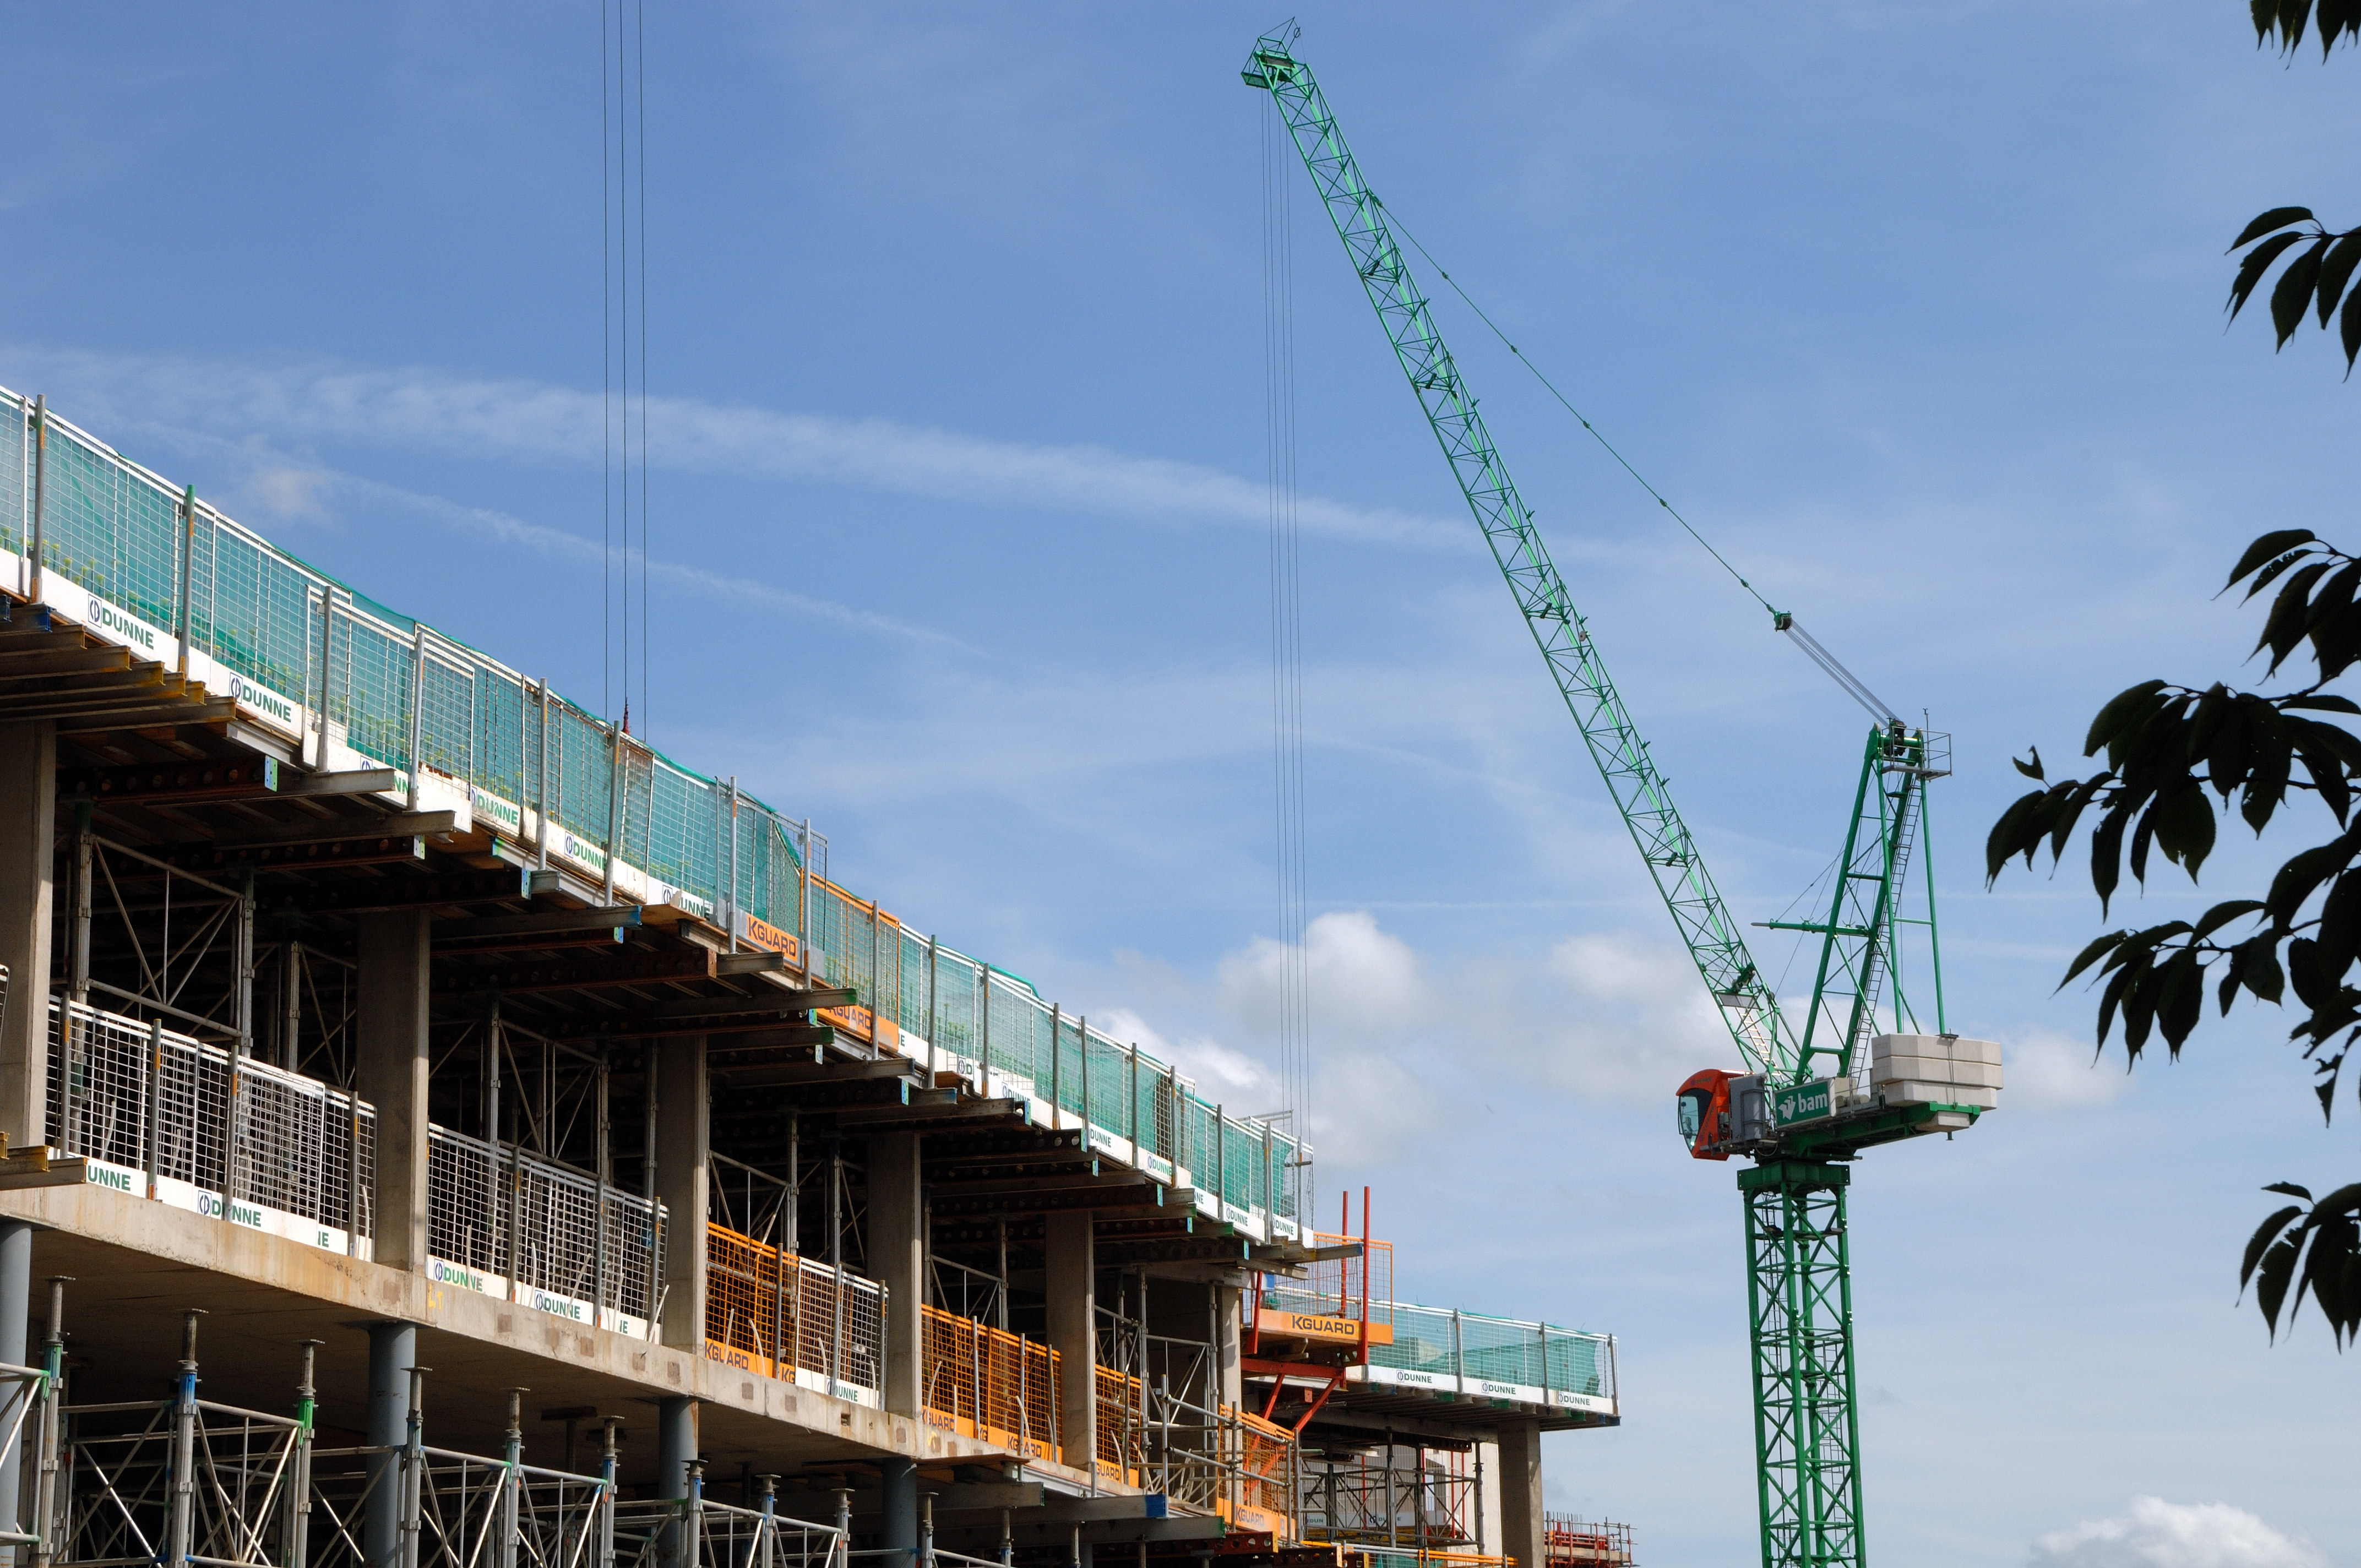 File:Construction work with crane 2.jpg - Wikipedia